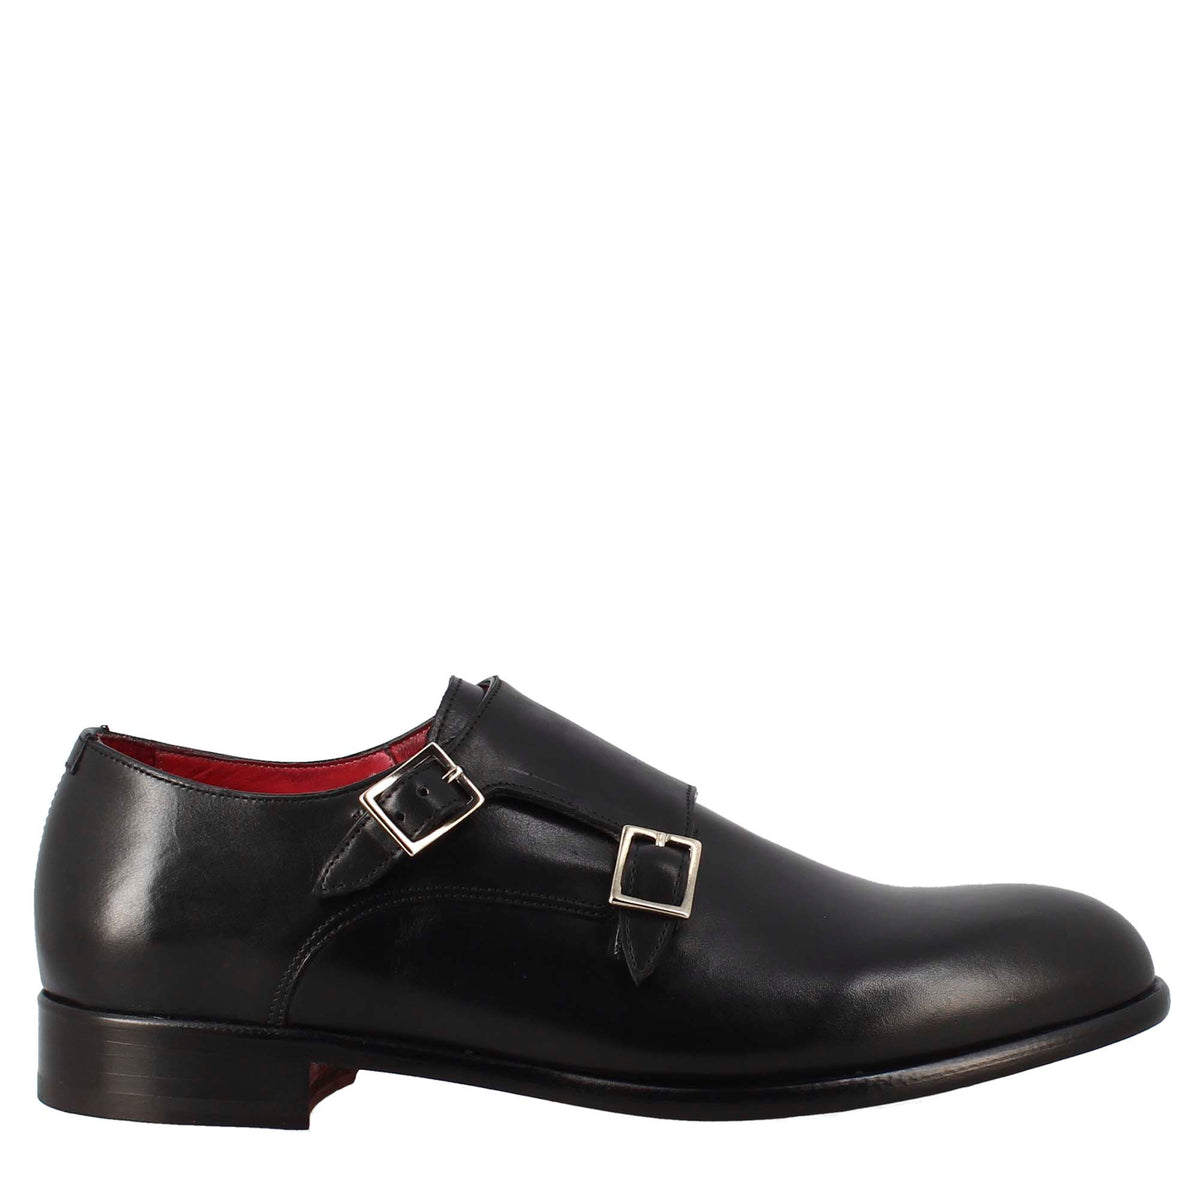 Men's double buckle shoe in black leather